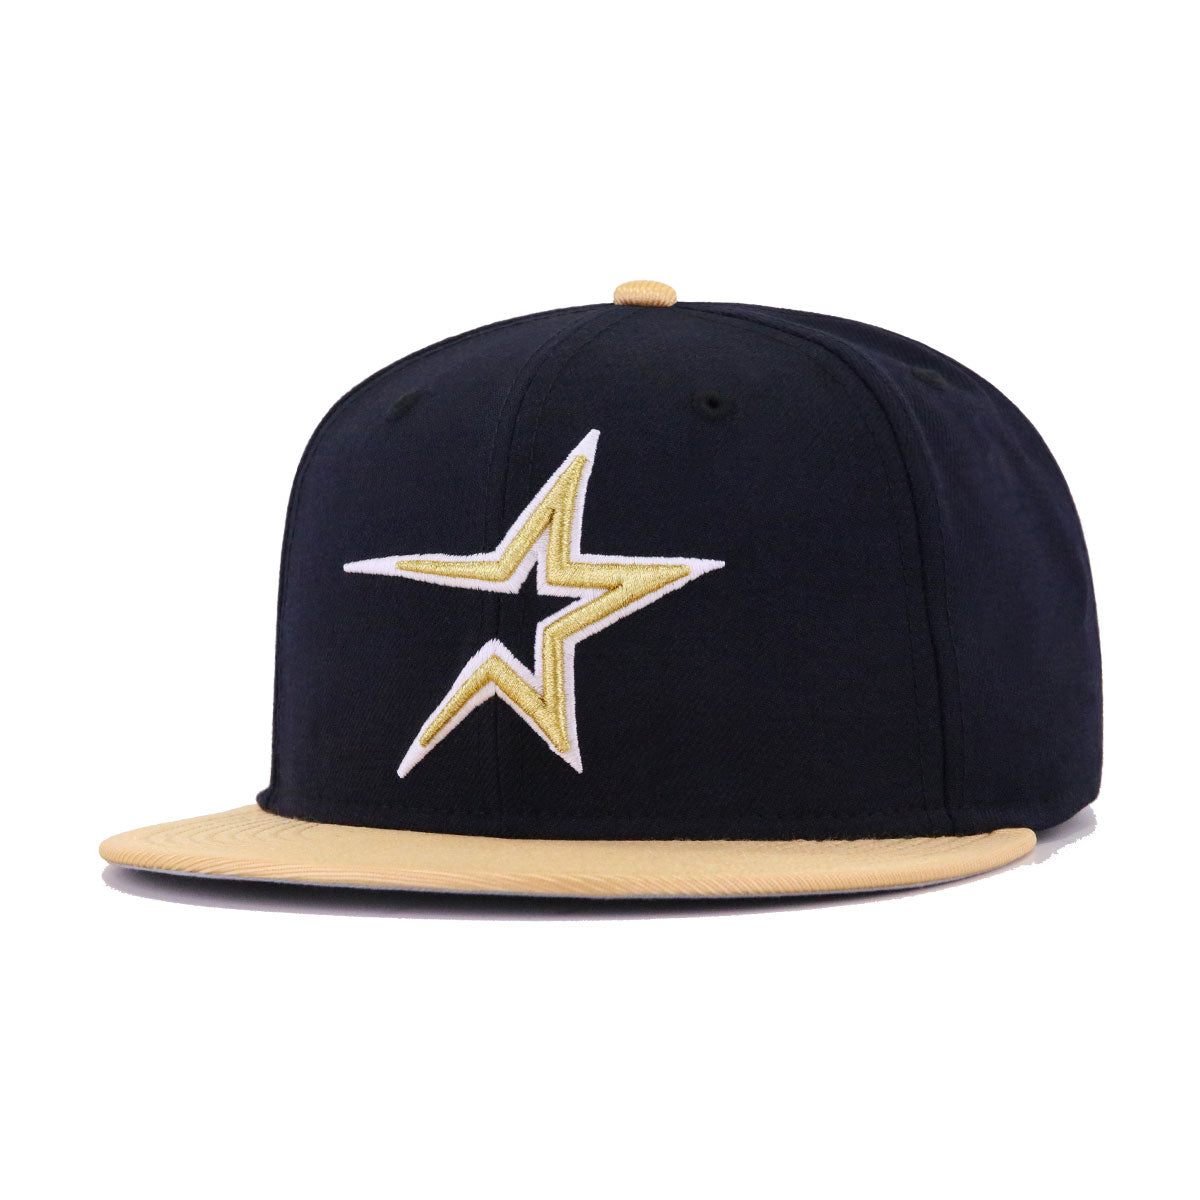 astros gold hat